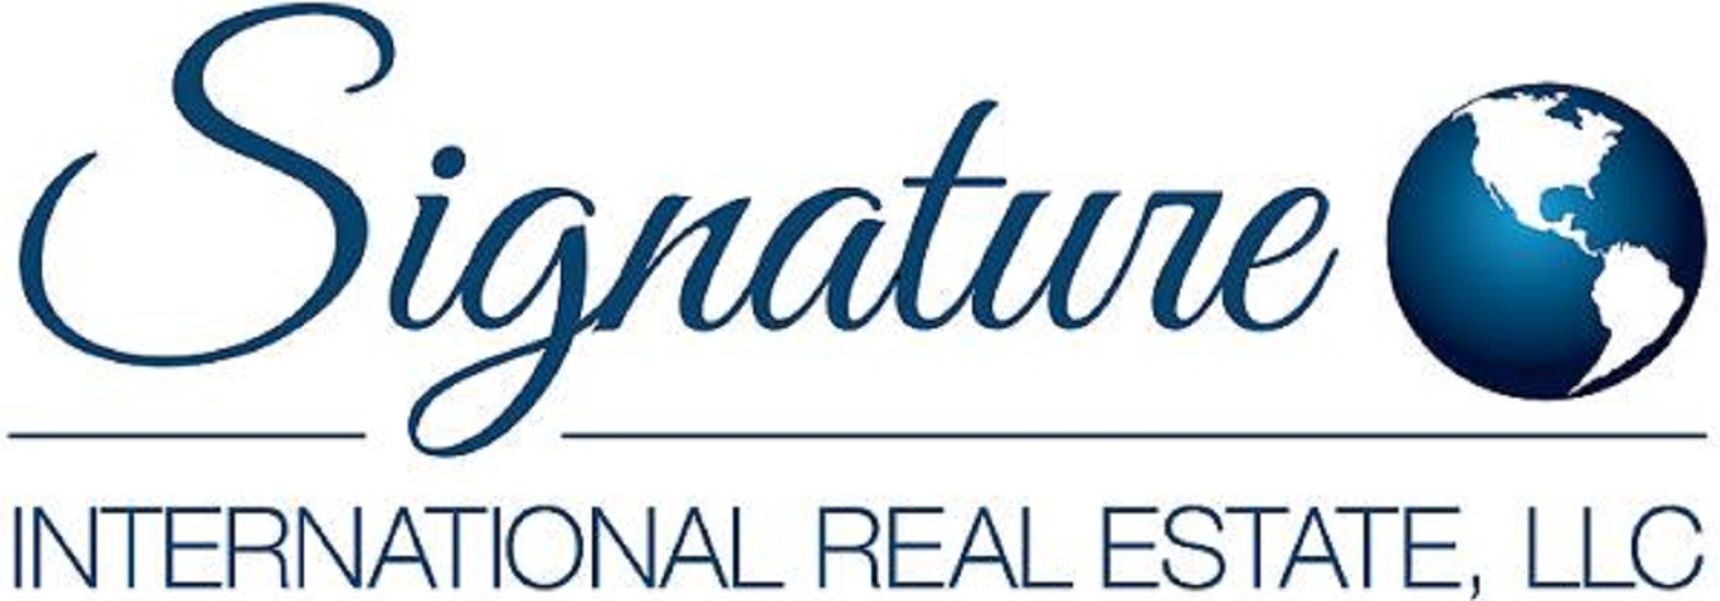 Signature International Real E